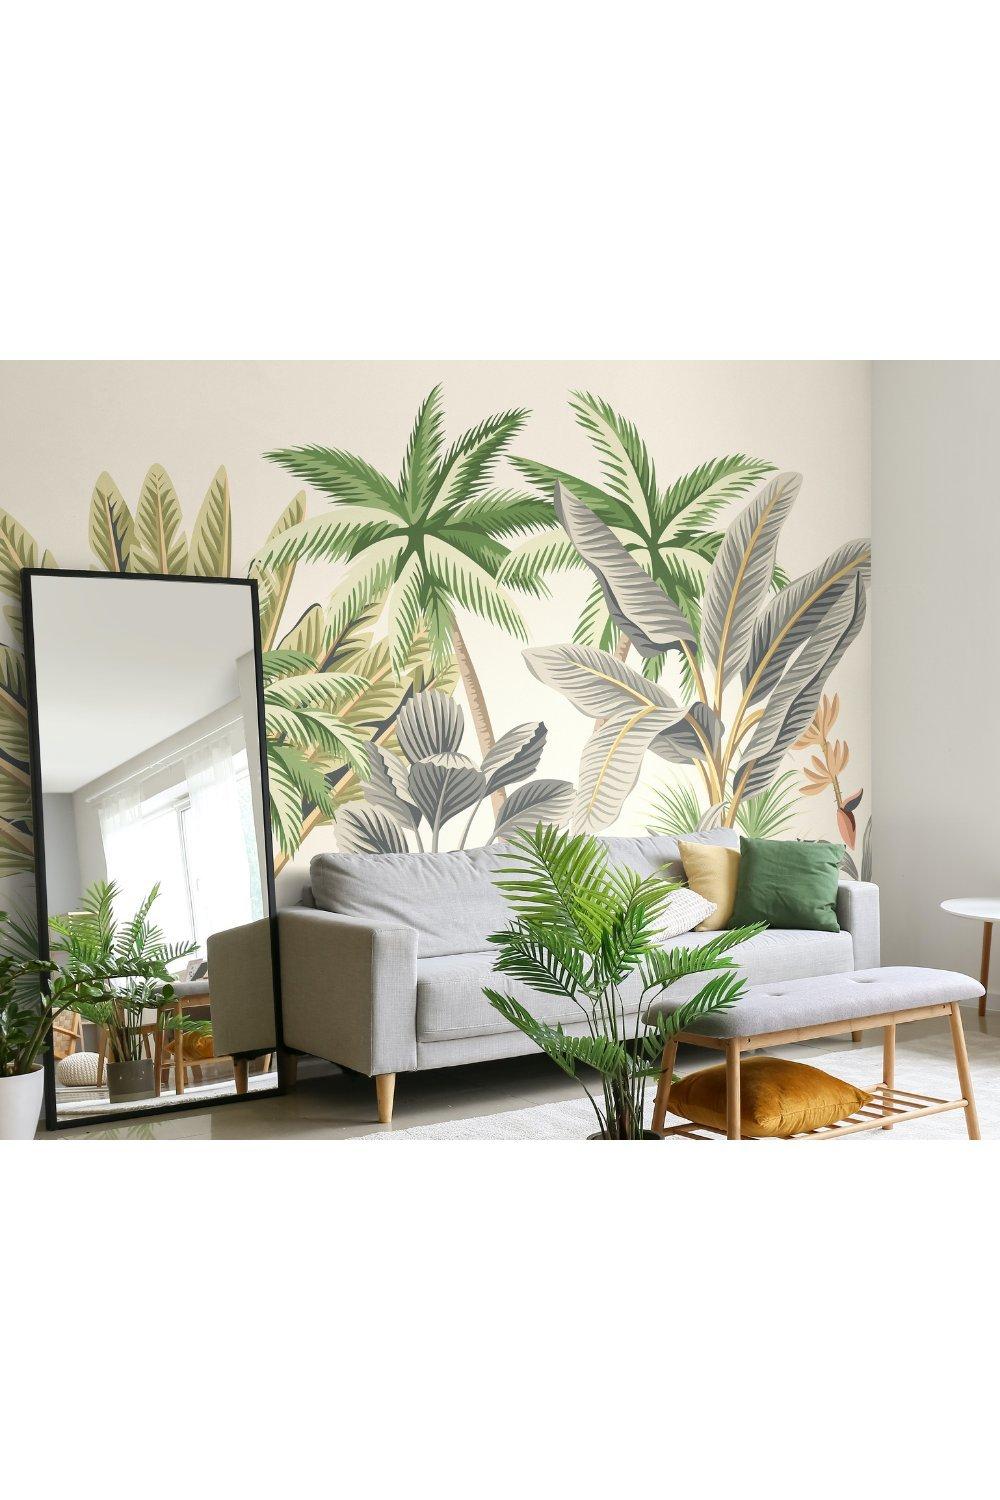 Tropical Palm Trees Matt Smooth Paste the Wall Mural 300cm wide x 240cm high